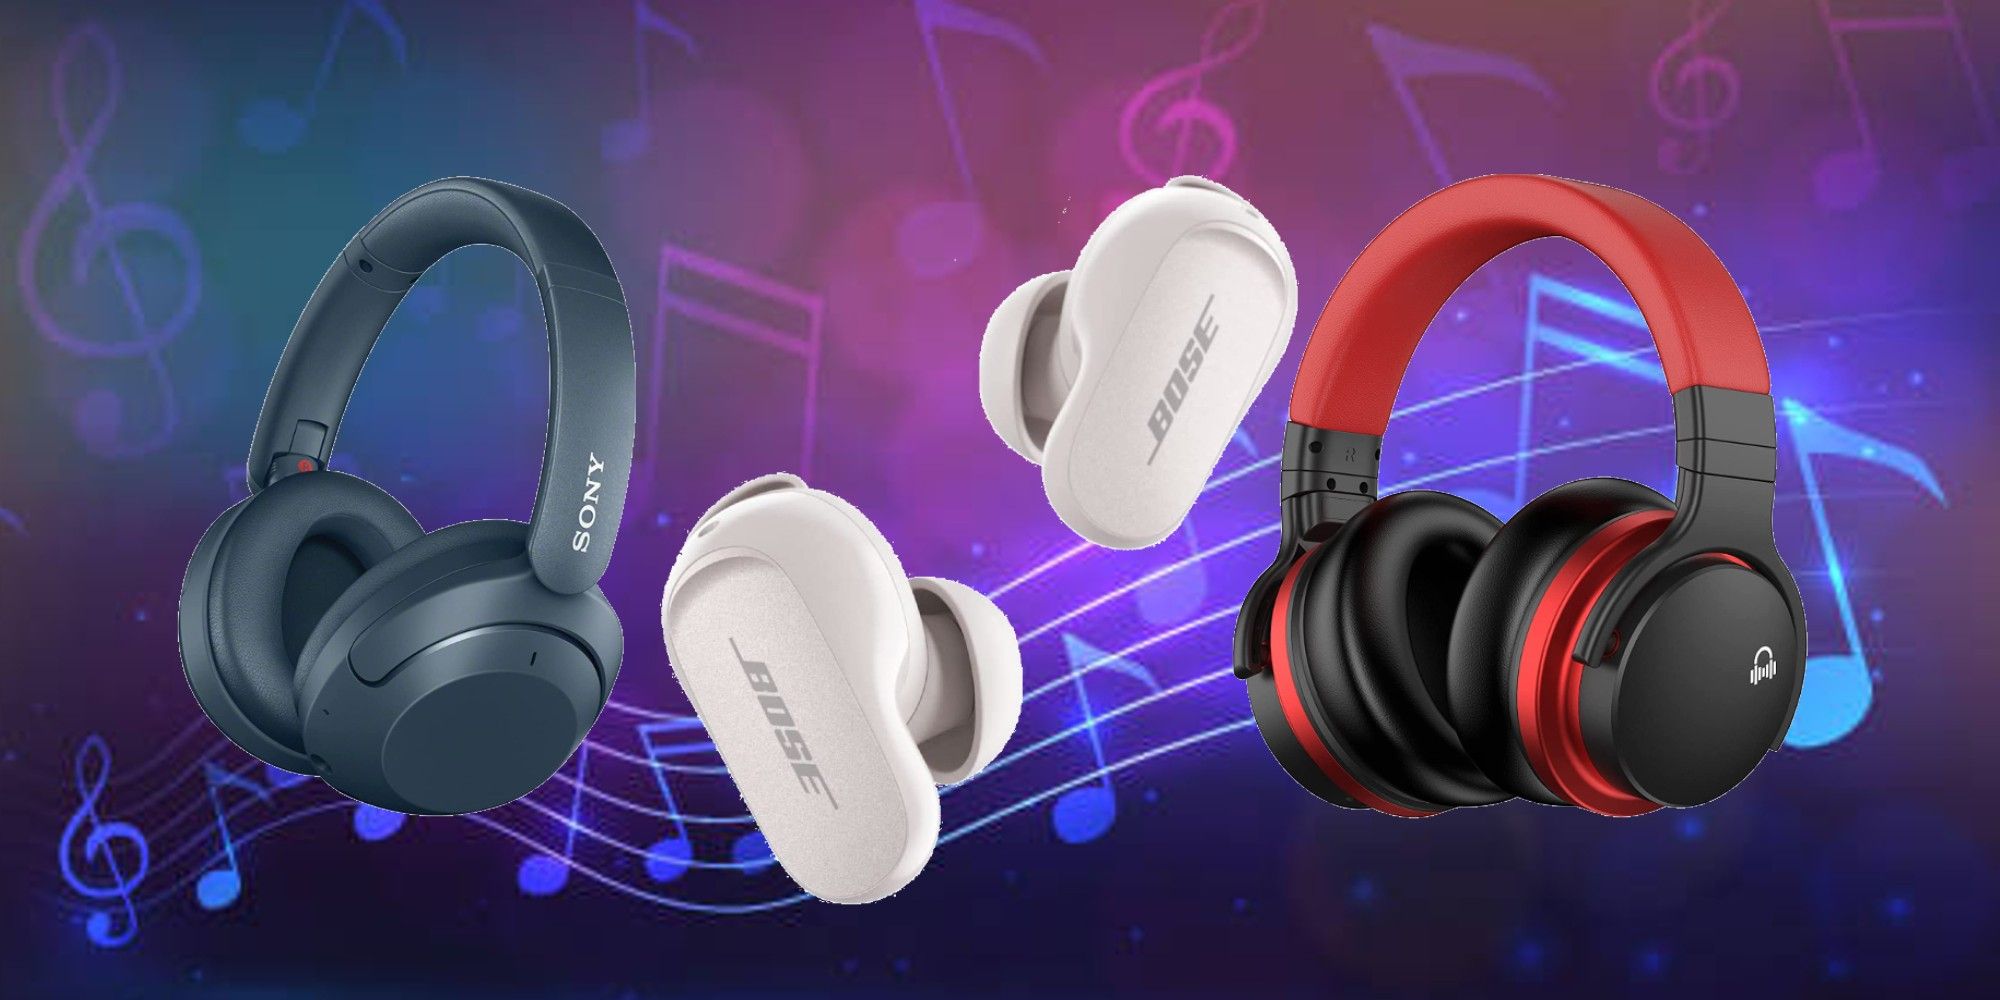 The Best NoiseCanceling Headphones To Buy This Holiday Season